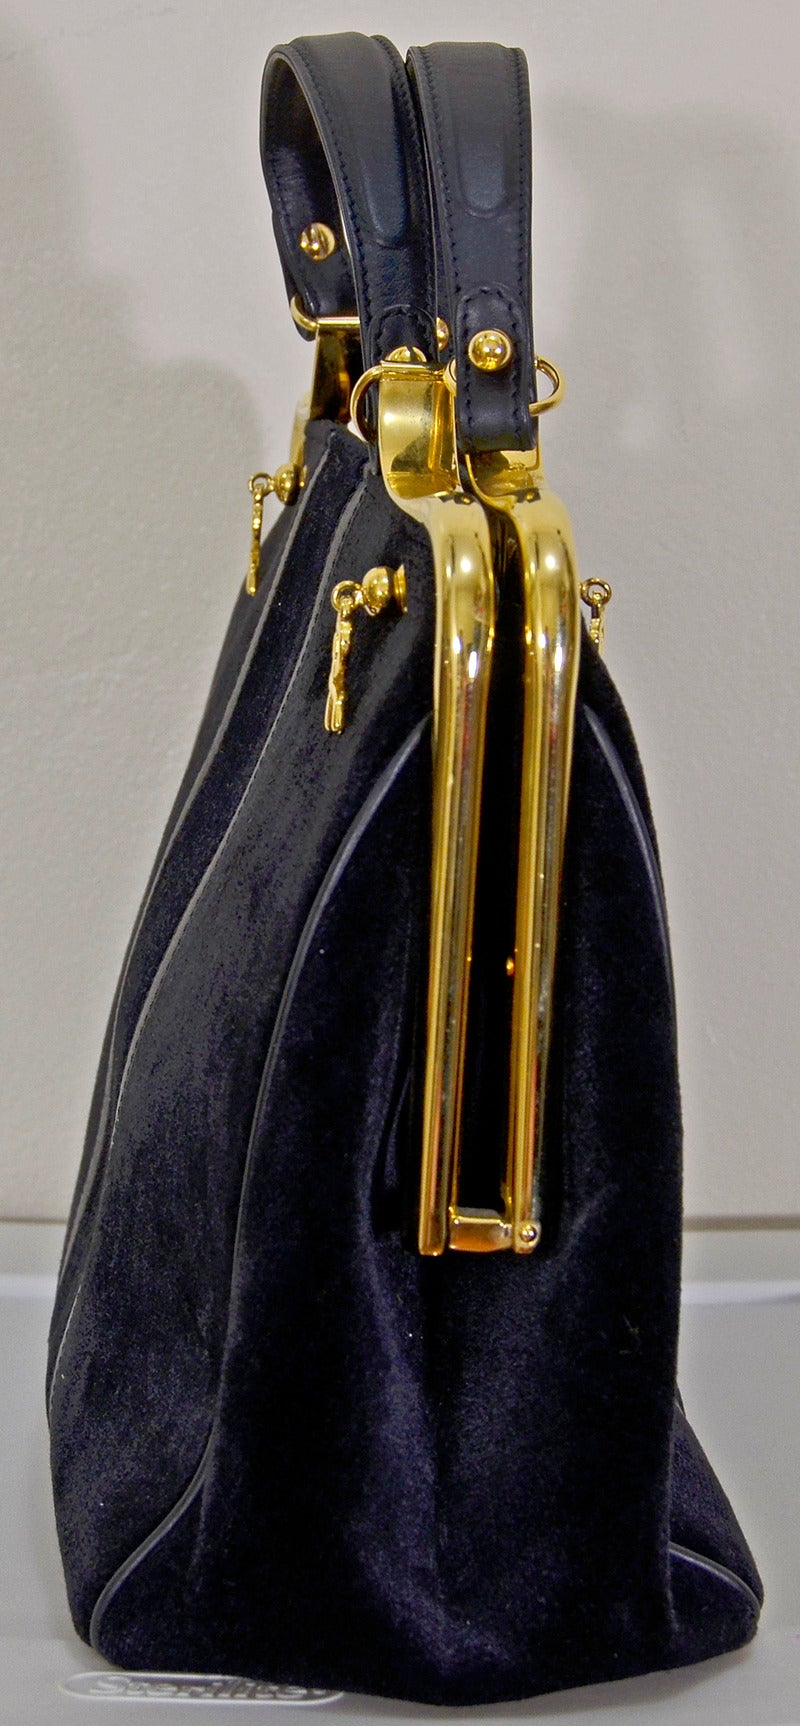 Classic Roberta Di Camerino cut velvet black handbag. Excellent condition.